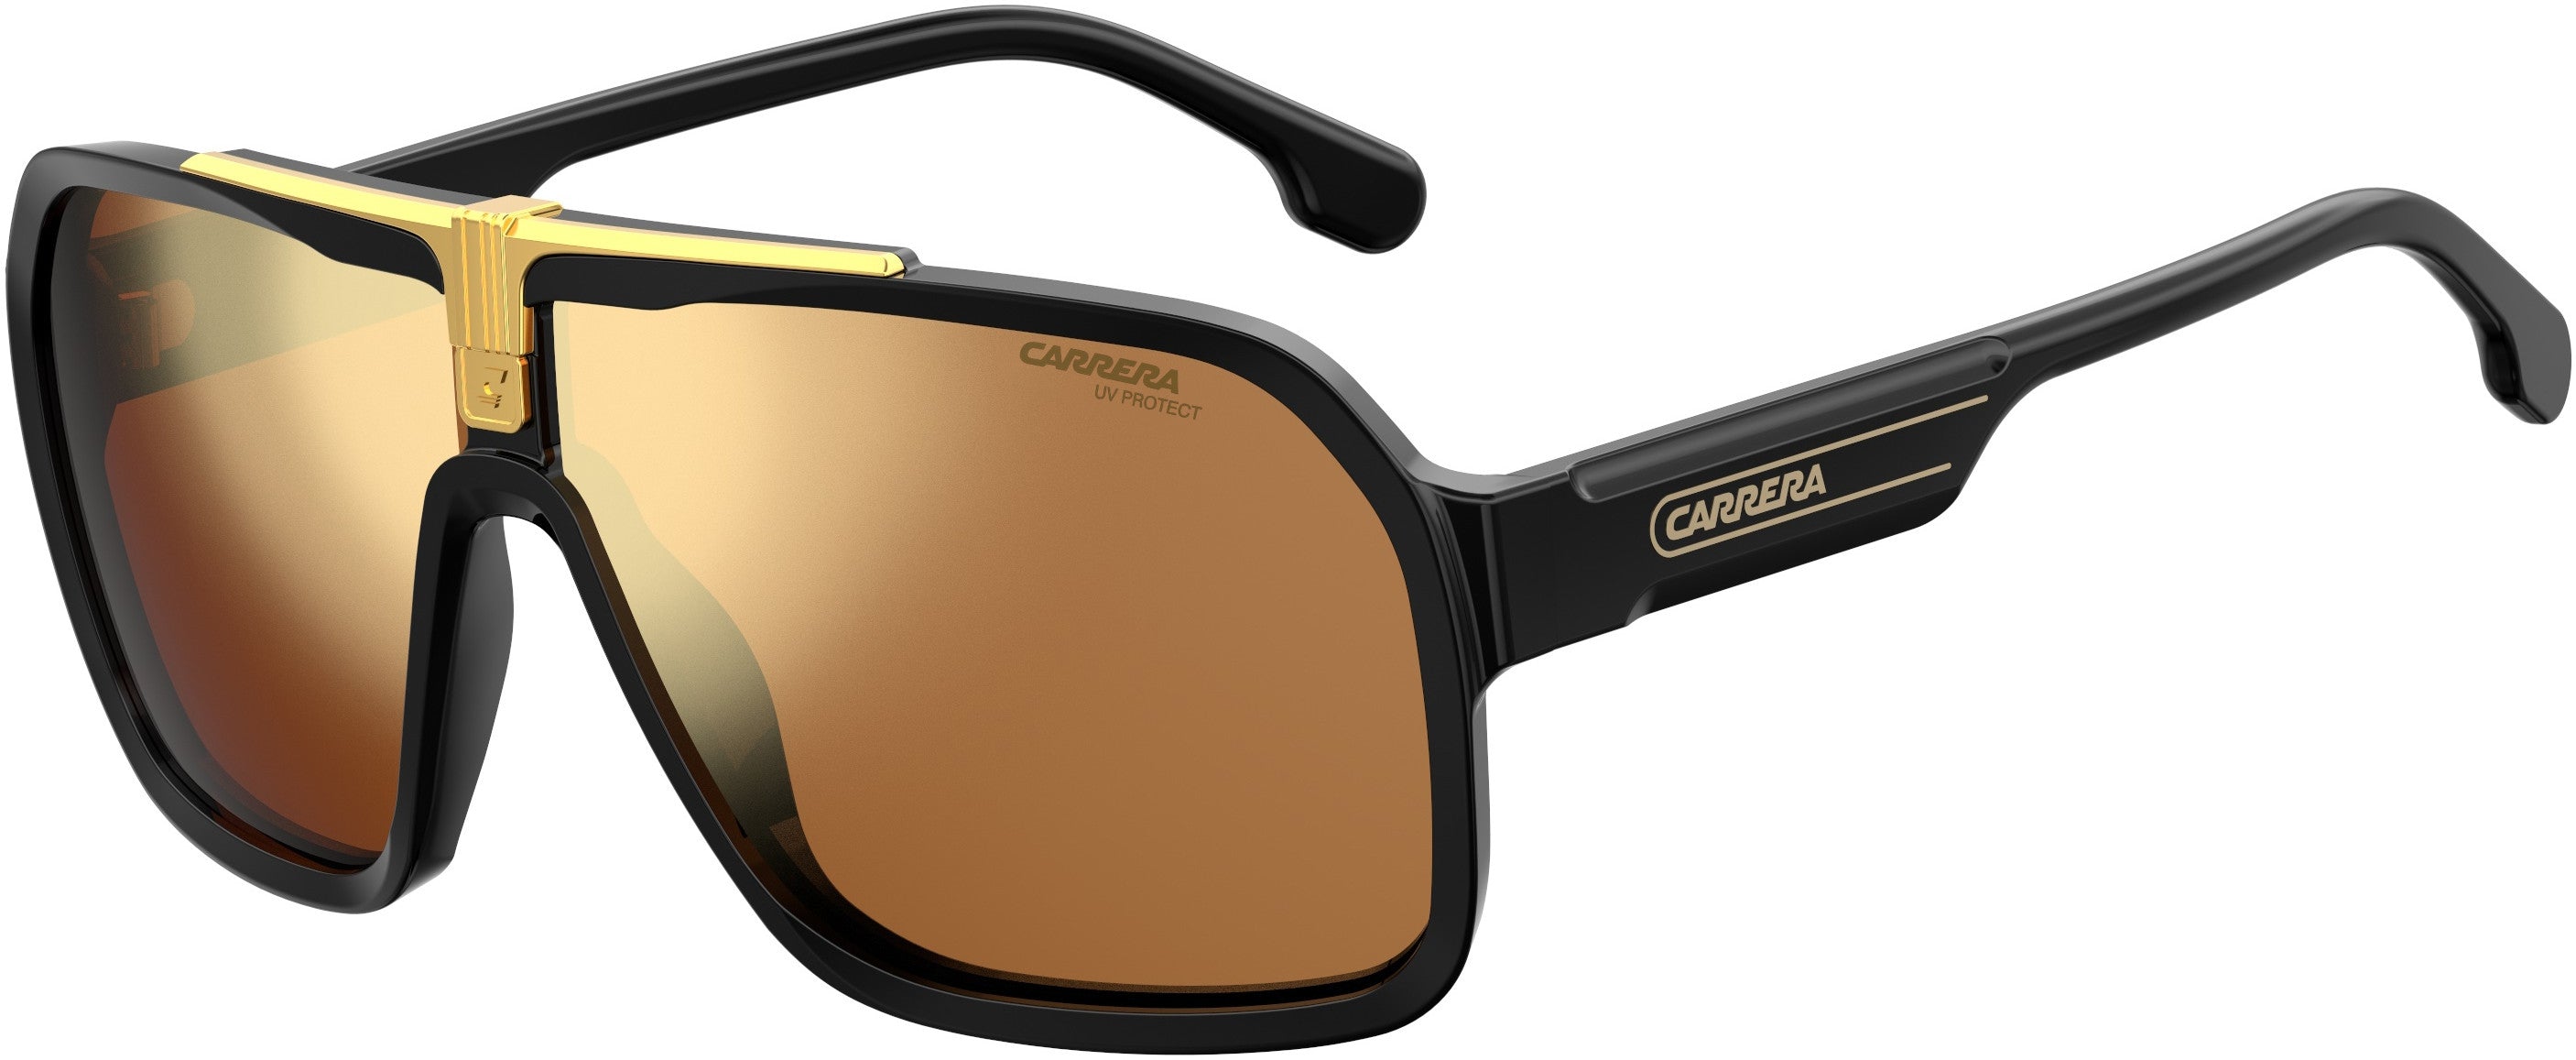  Carrera 1014/S Navigator Sunglasses 0I46-0I46  Black Gold (K1 Gold Mirror)